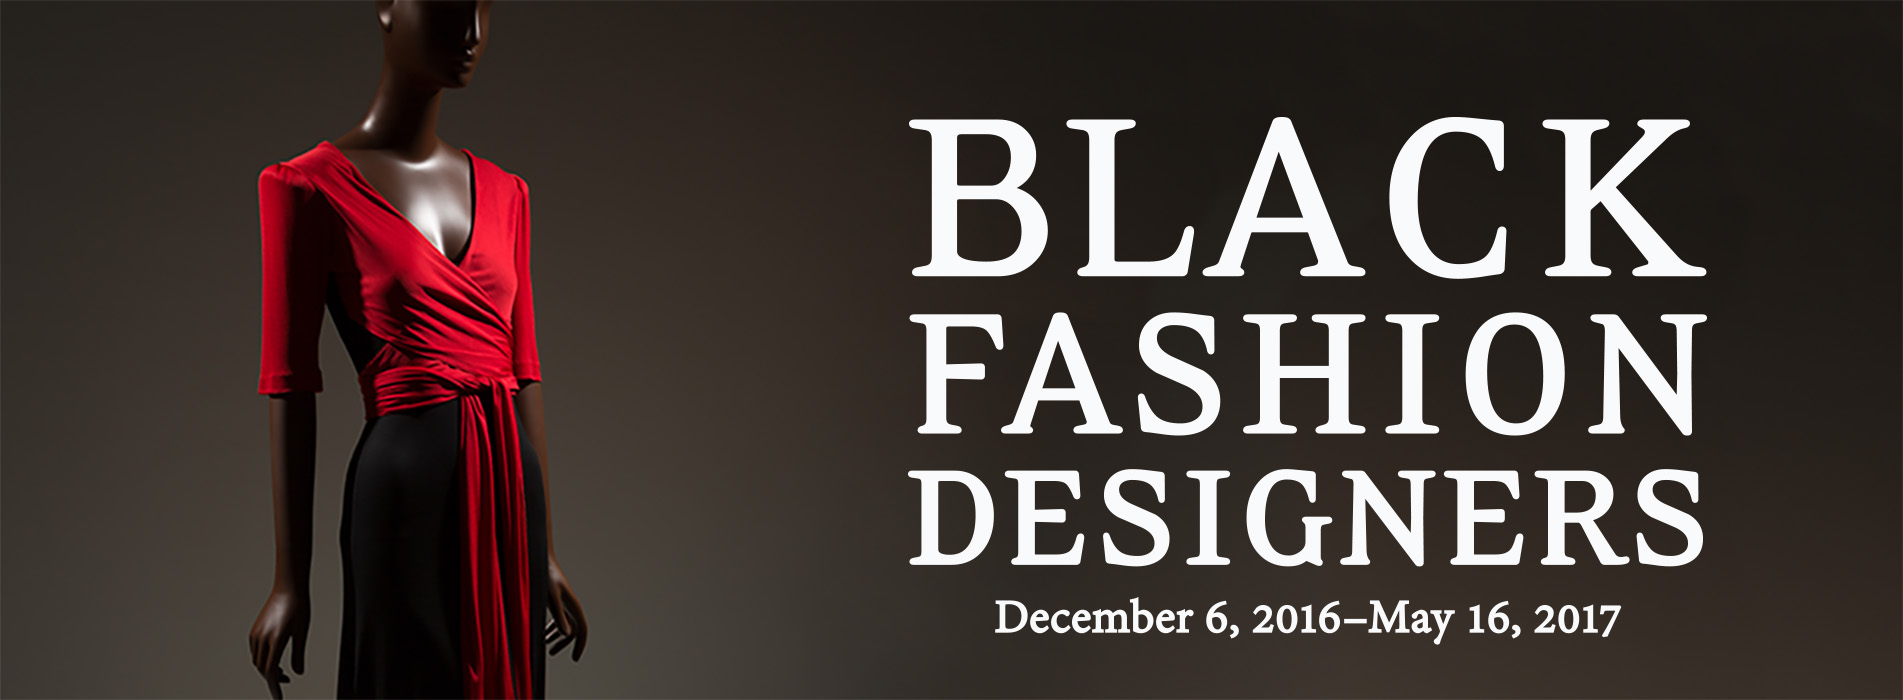 graphic for Black Fashion Designers